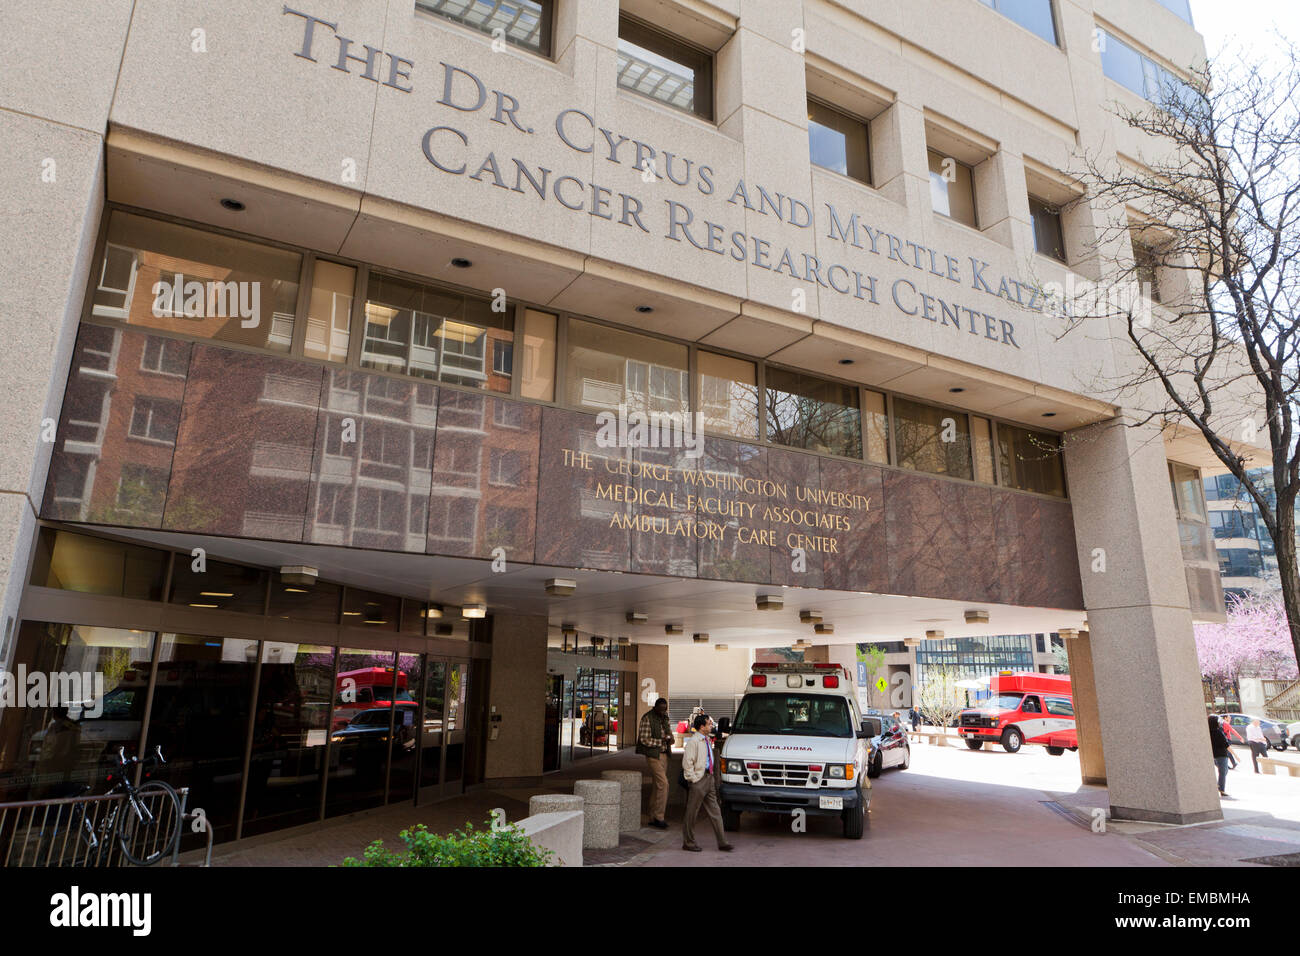 The Dr. Cyrus and Myrtle Katzen Cancer Research Center, George Washington University - Washington, DC USA Stock Photo